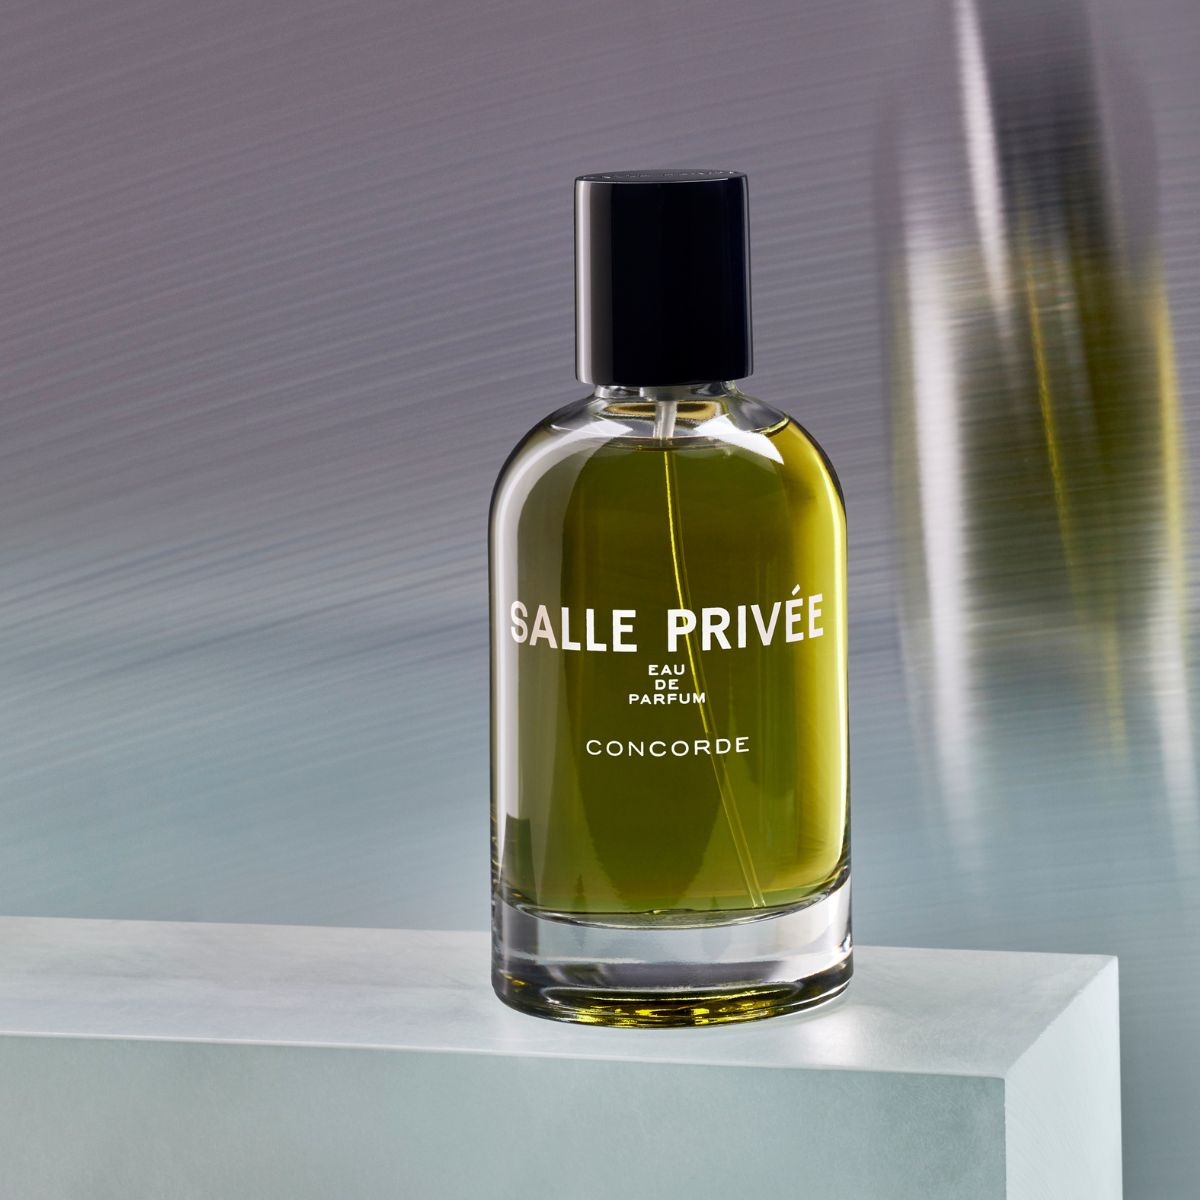 Image of Concorde eau de parfum by the perfume brand Salle Privee